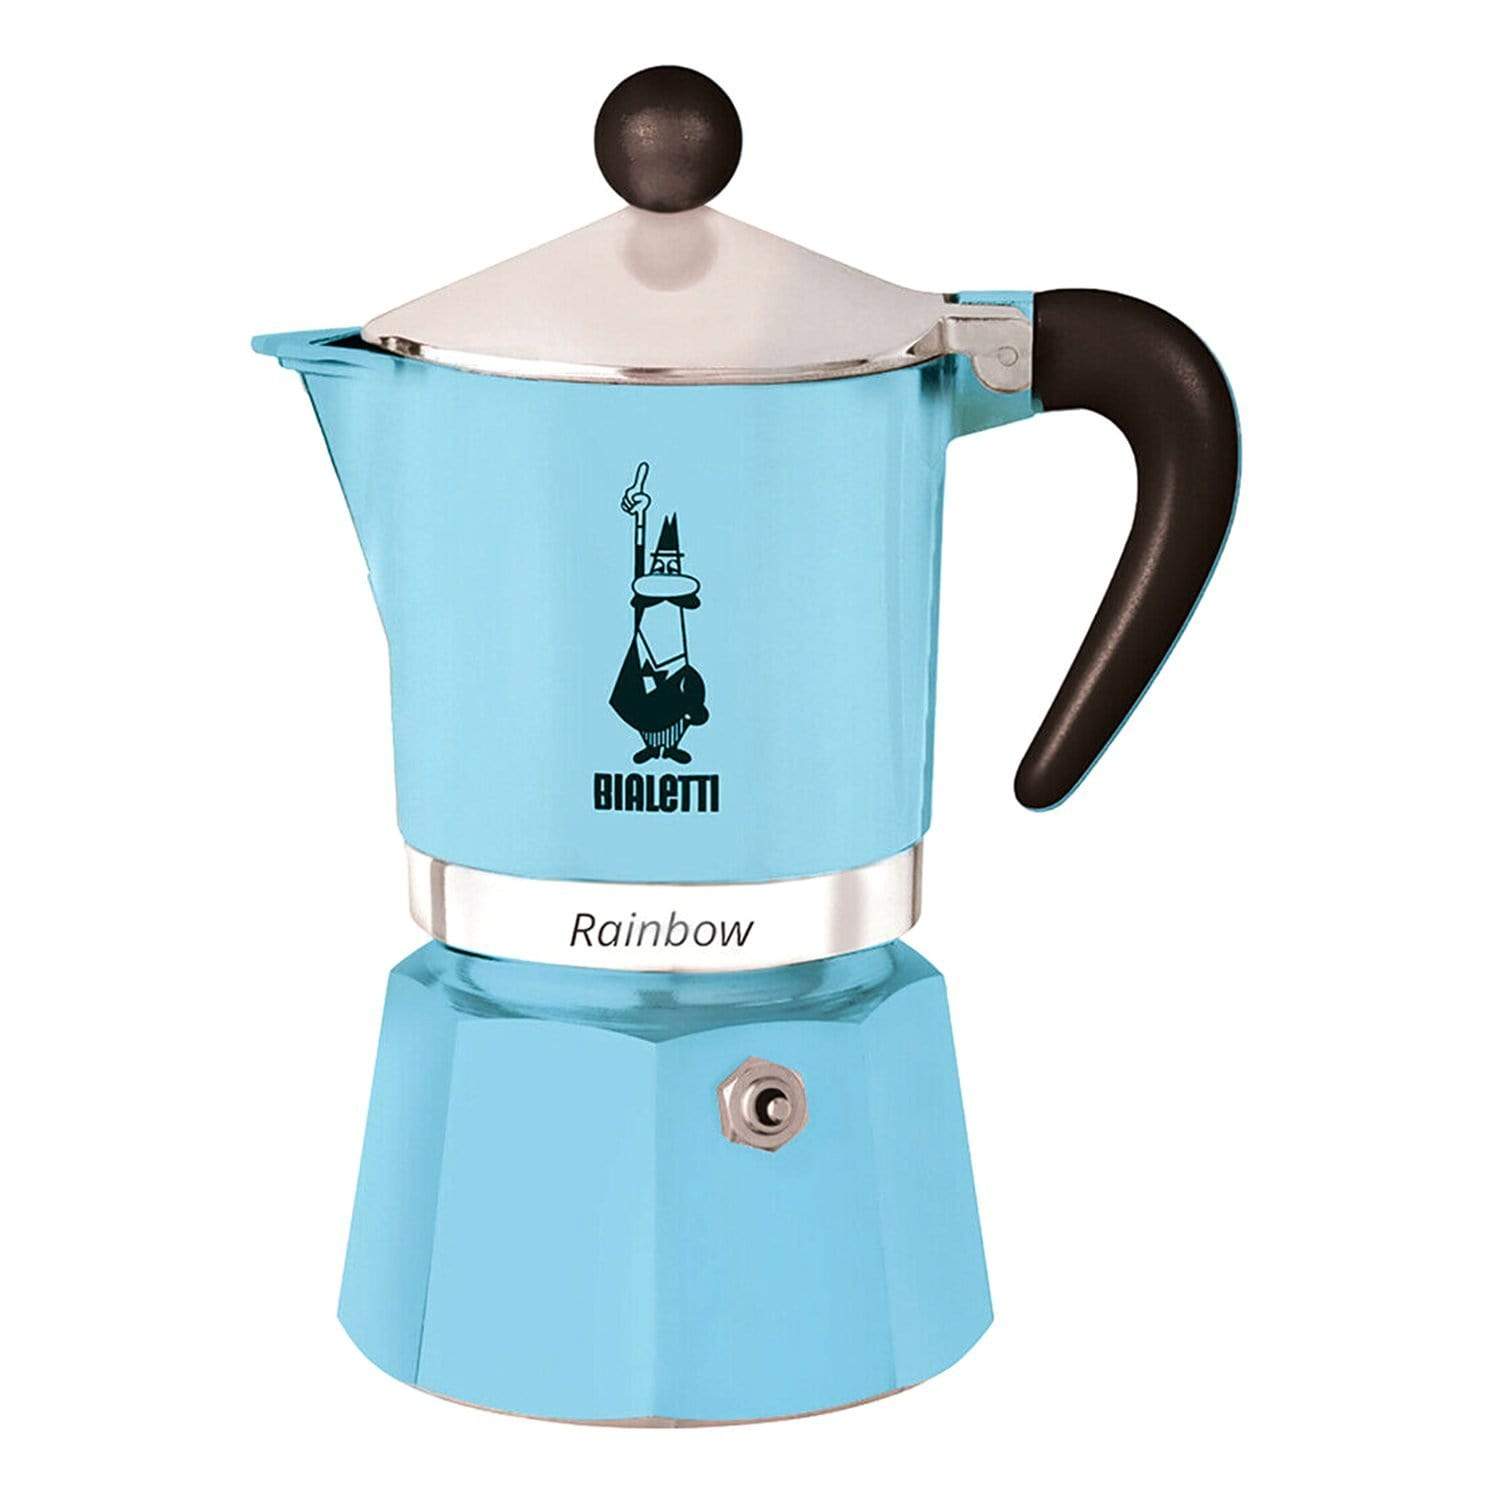 Bialetti Rainbow Coffee Maker - Light Blue, 3 Cups - 5042 - Jashanmal Home